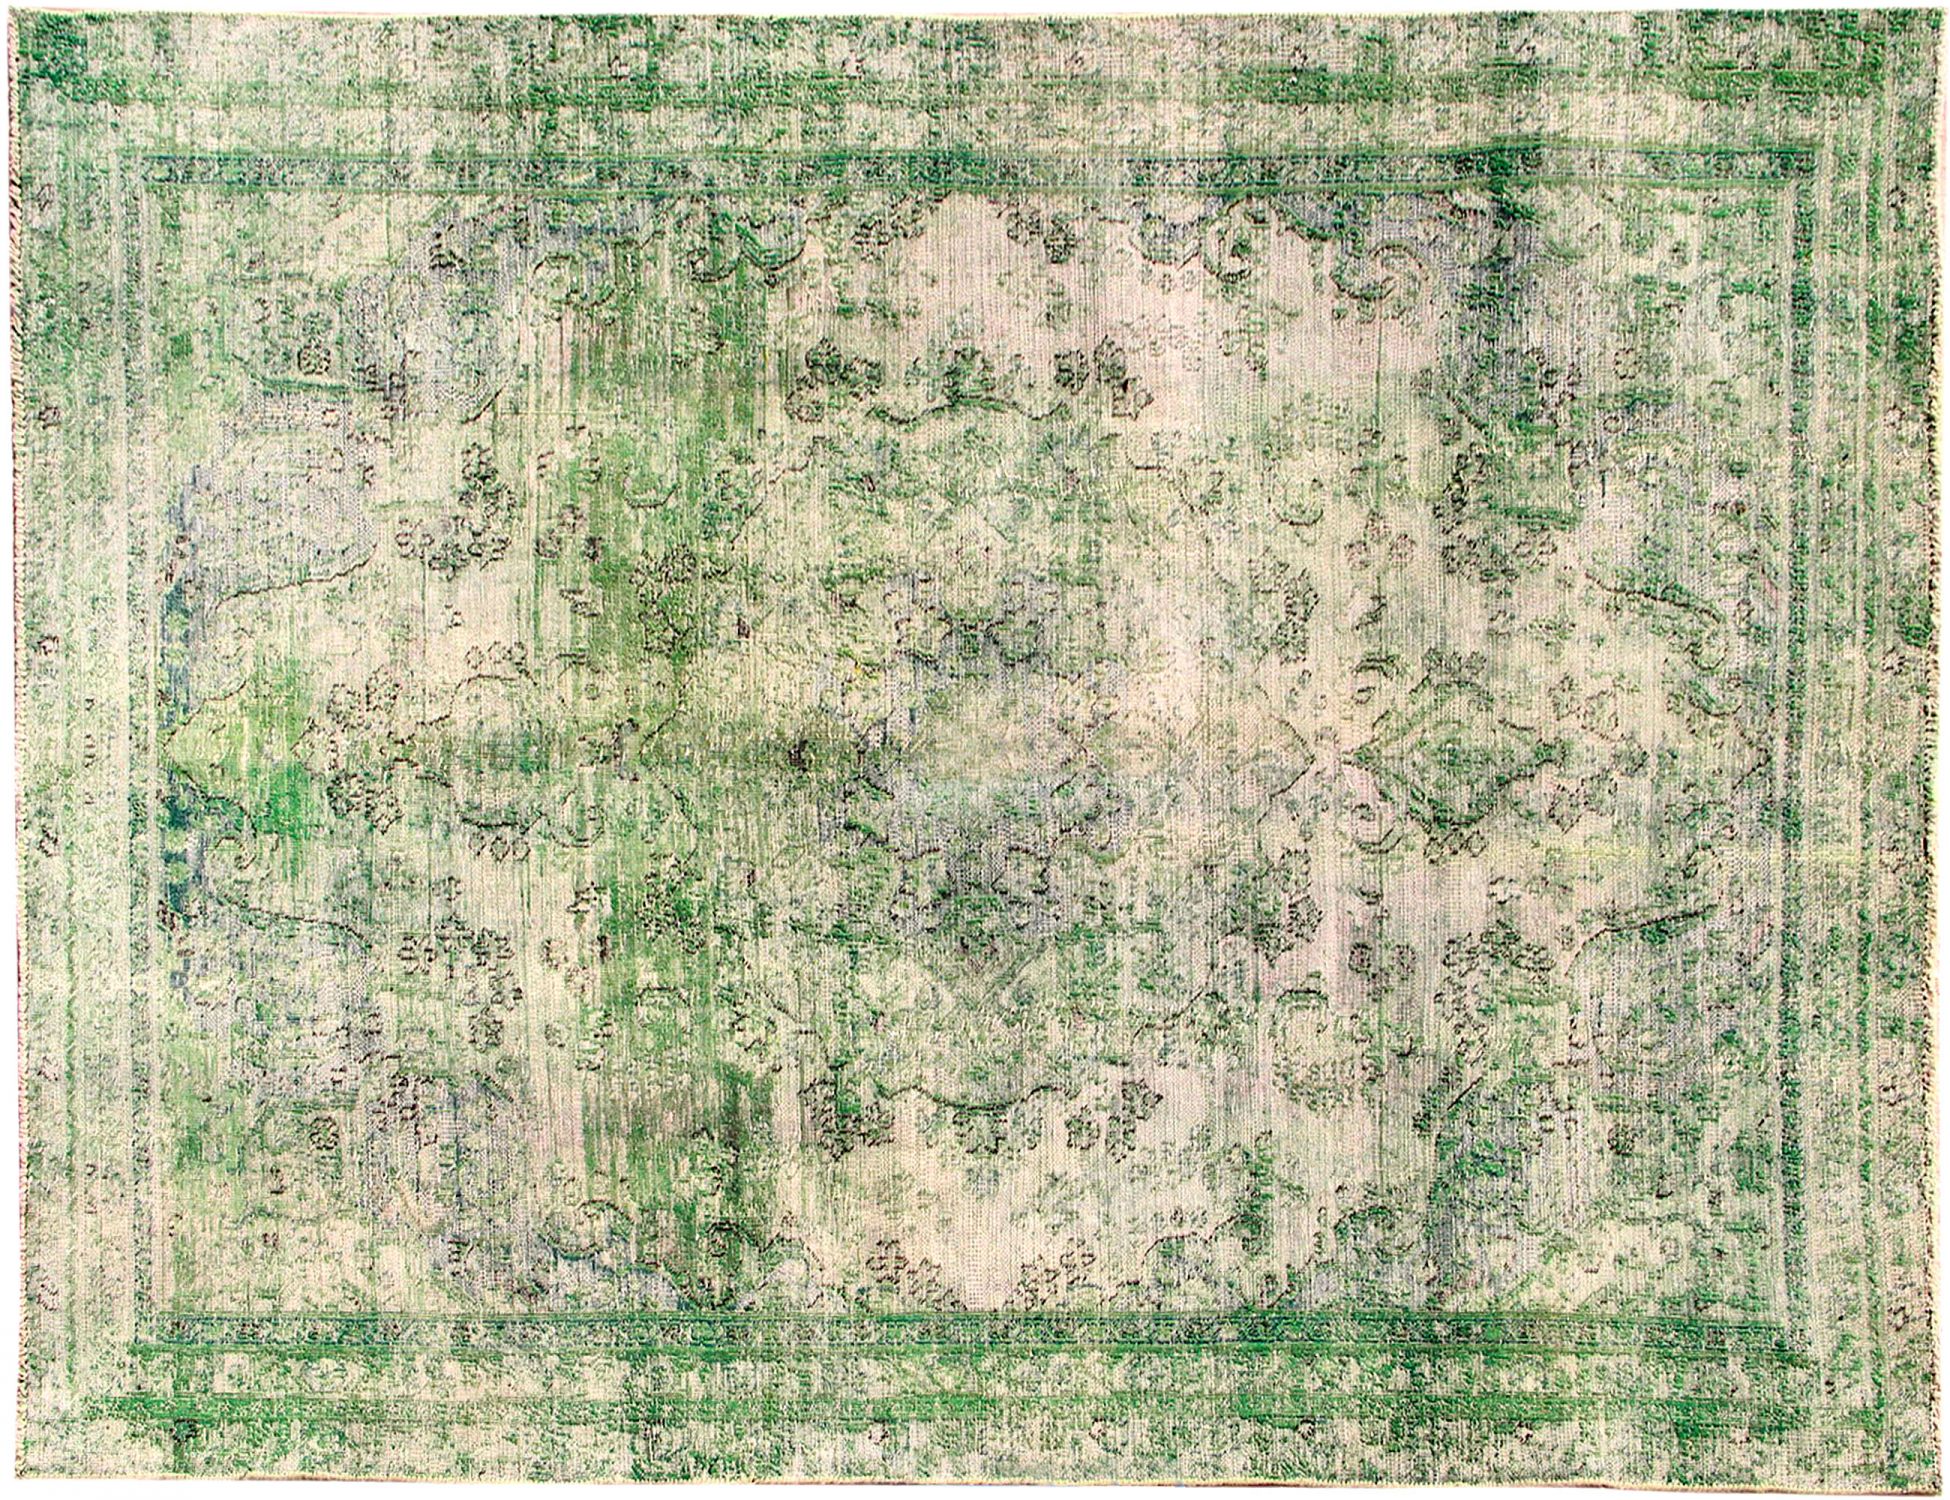 Persialaiset vintage matot  vihreä <br/>275 x 190 cm